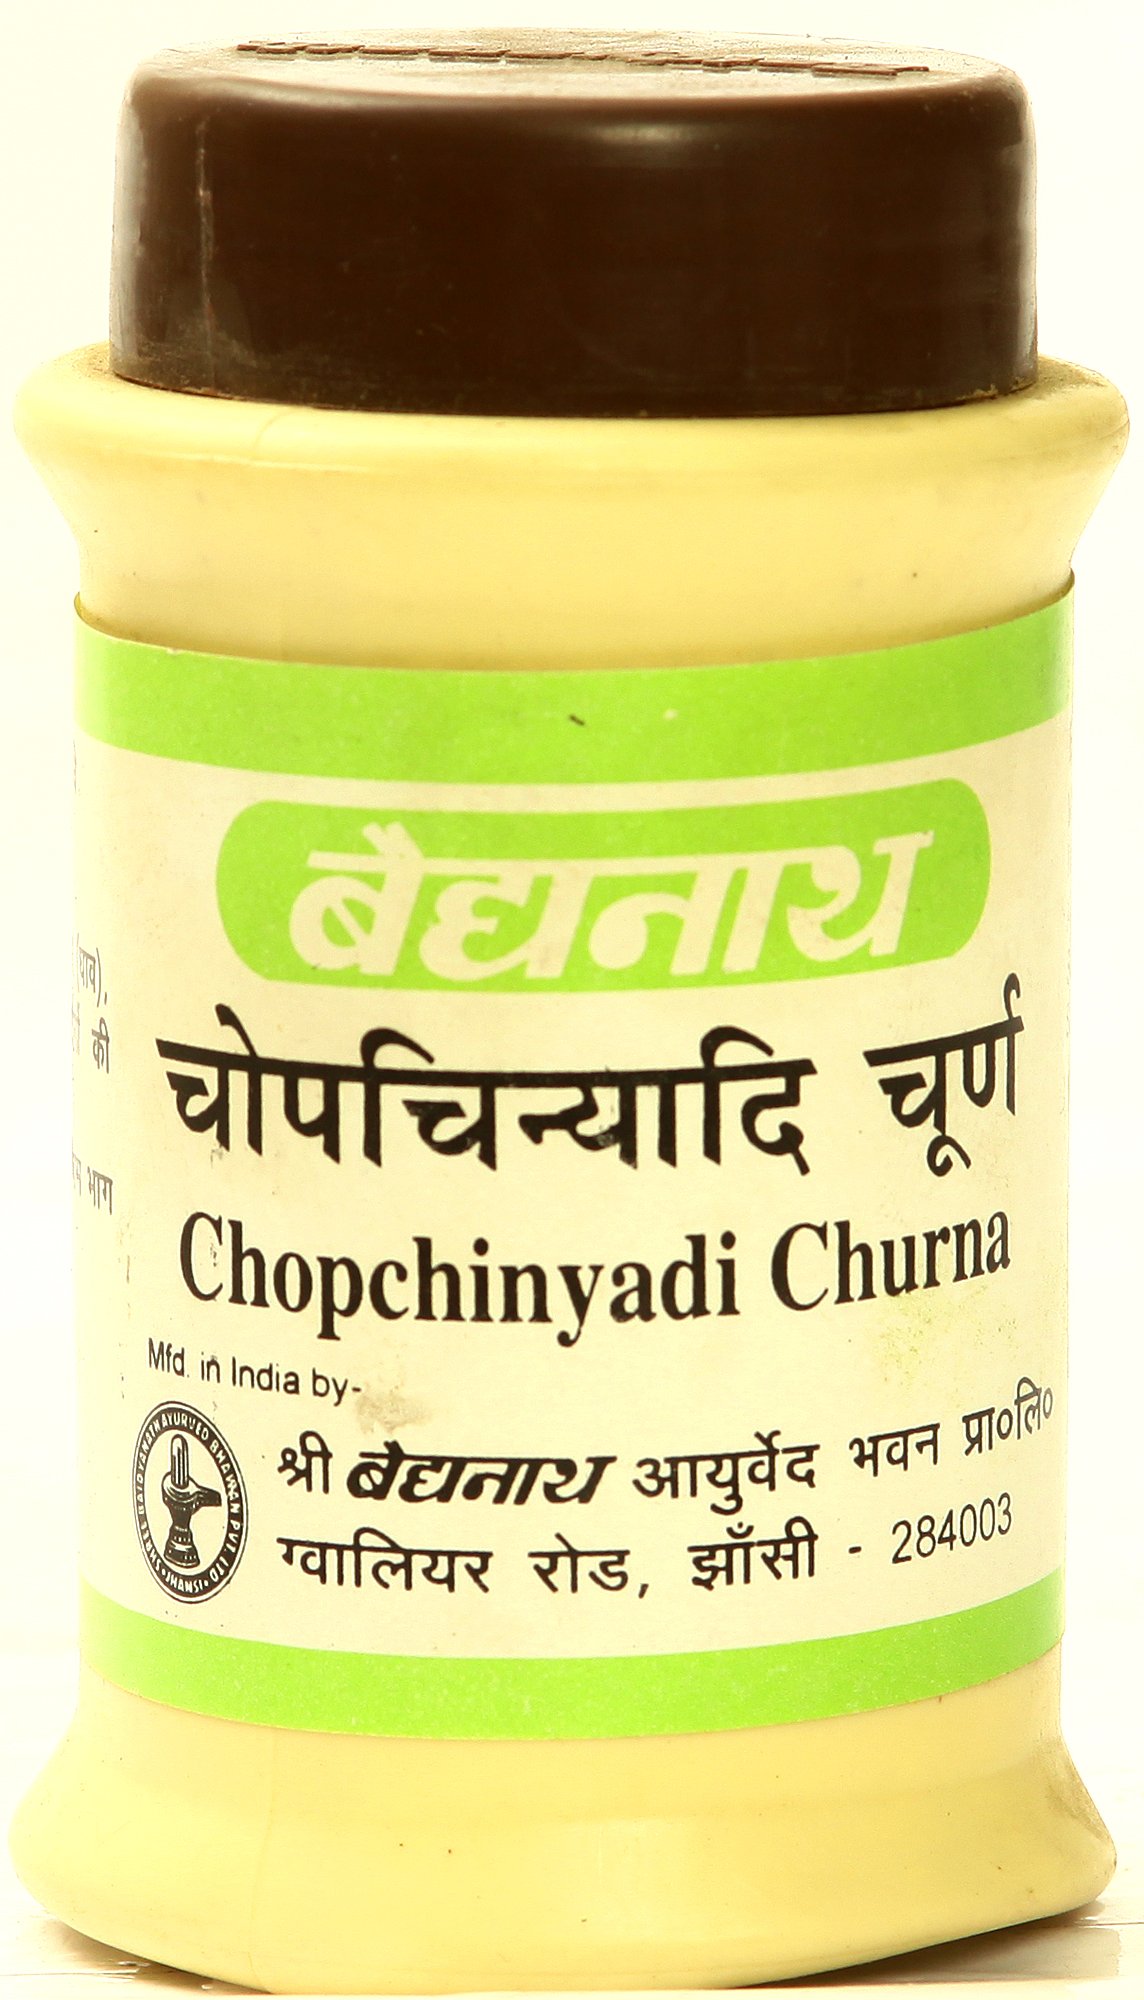 Baidyanth Chopchinyadi Churna - book cover